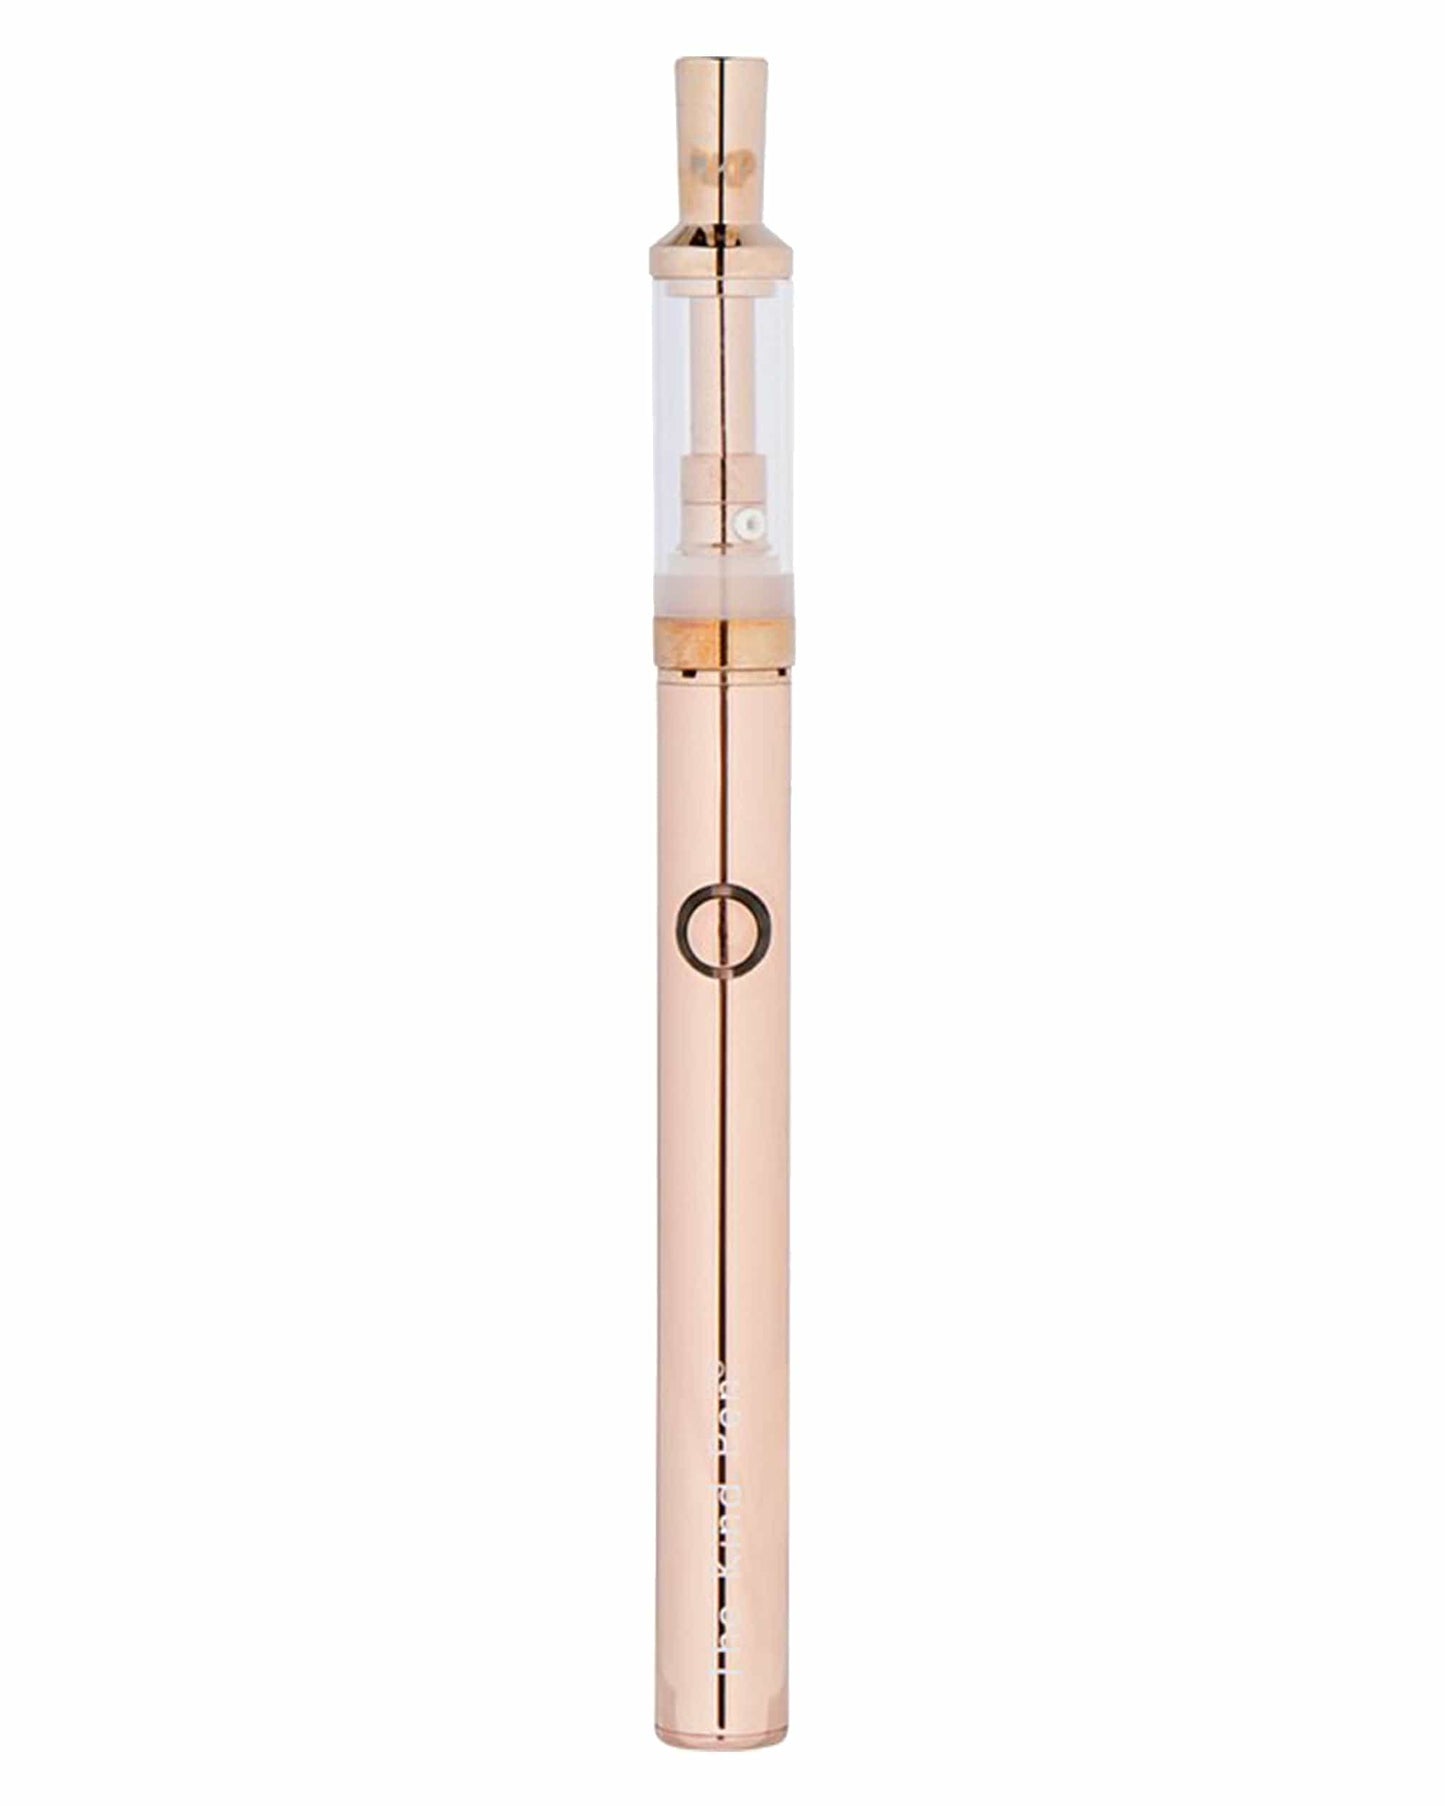 The Kind Pen Premium Edition Slim Oil Pen Best Sales Price - Vaporizers